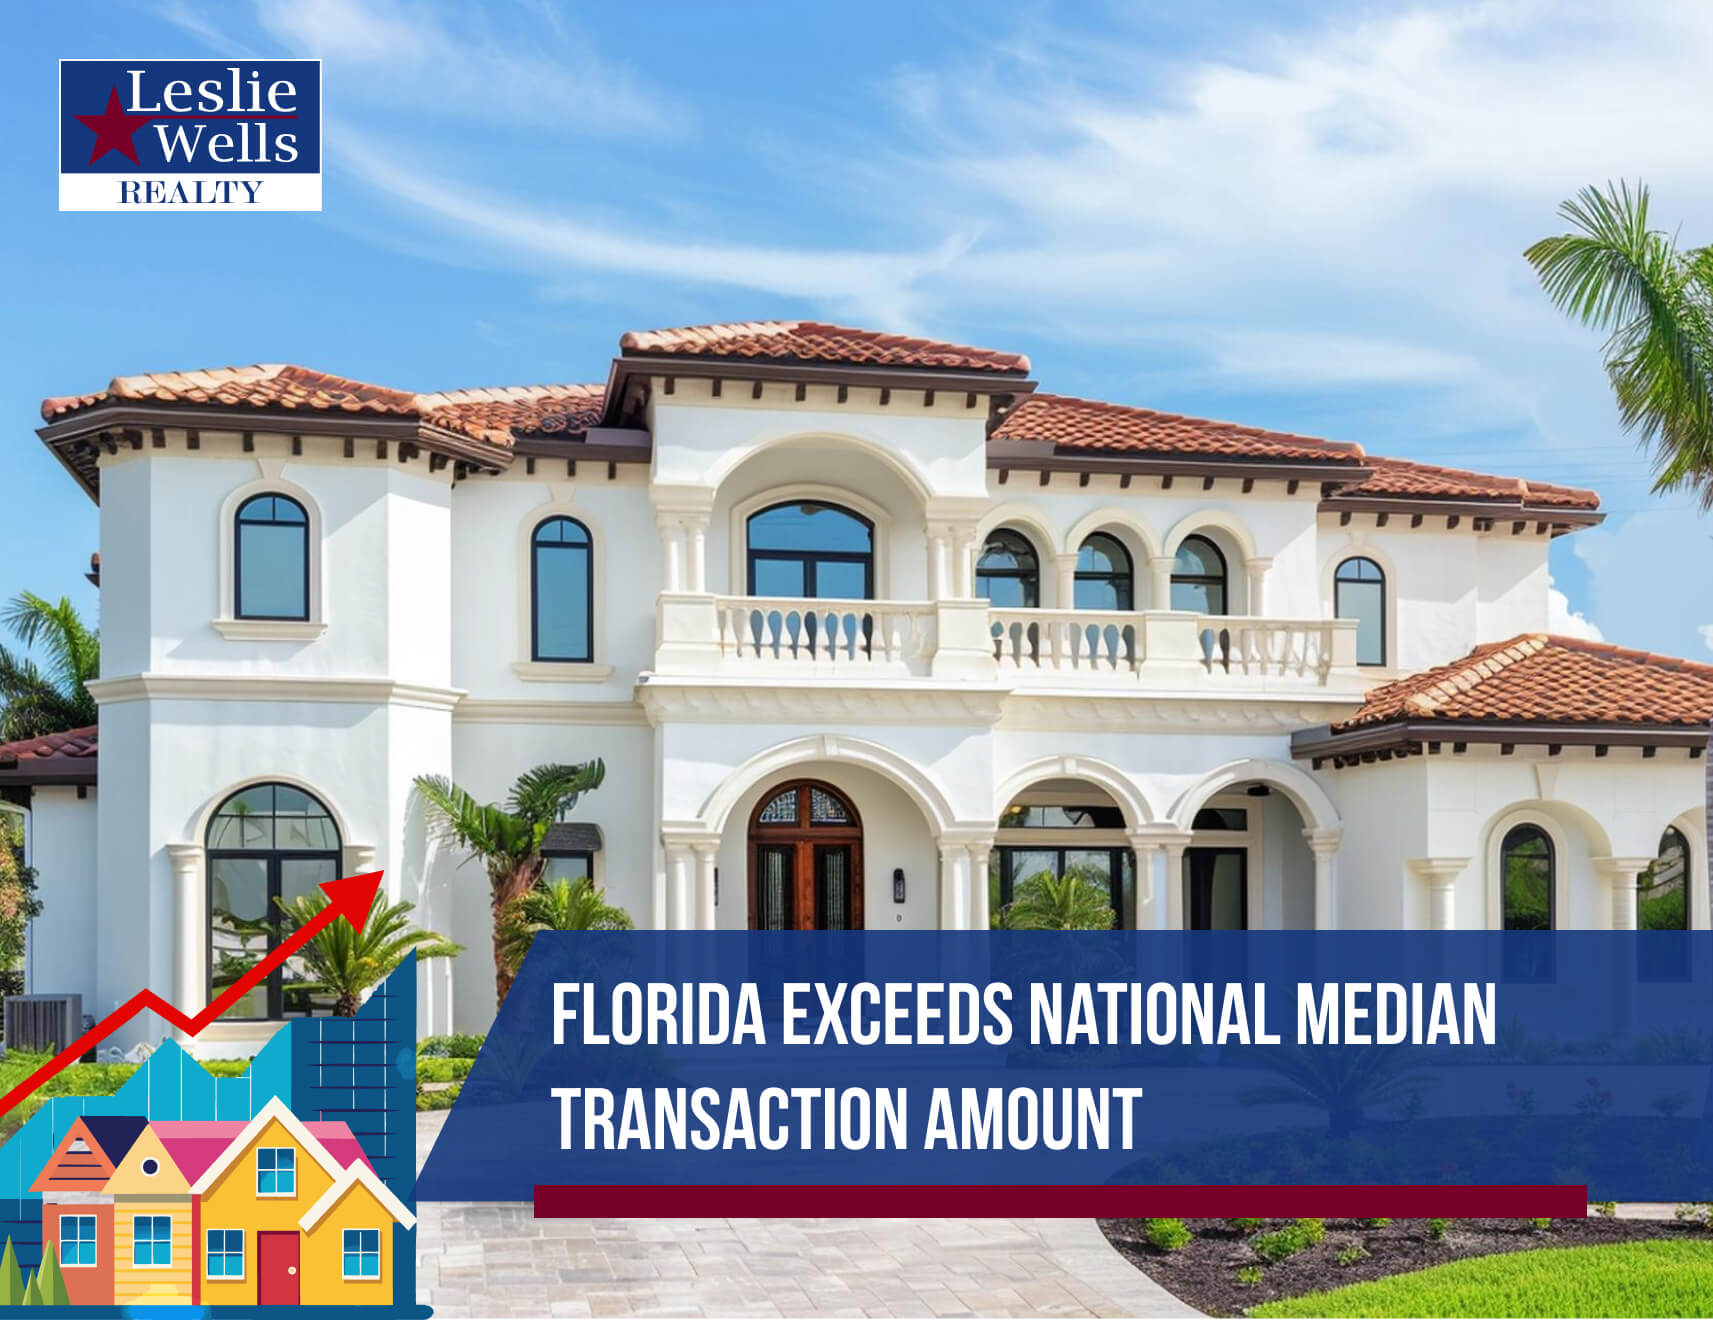 Florida Exceeds National Median Transaction Amount